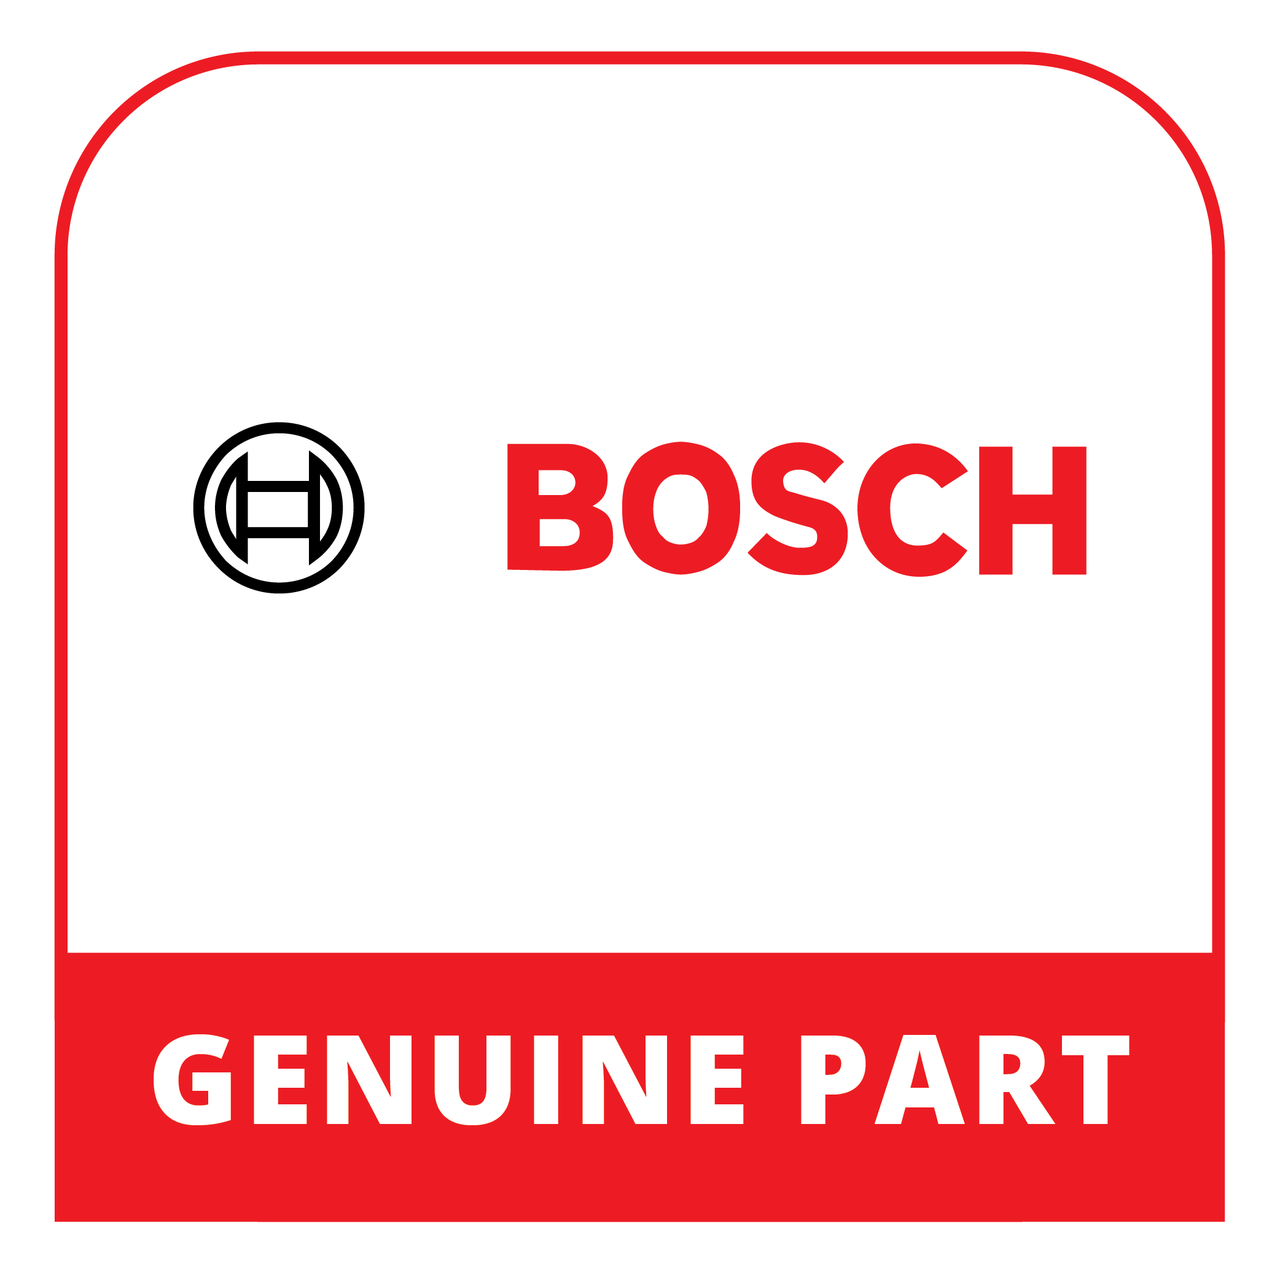 Bosch (Thermador) 20001659 - Freezer Basket - Genuine Bosch (Thermador) Part